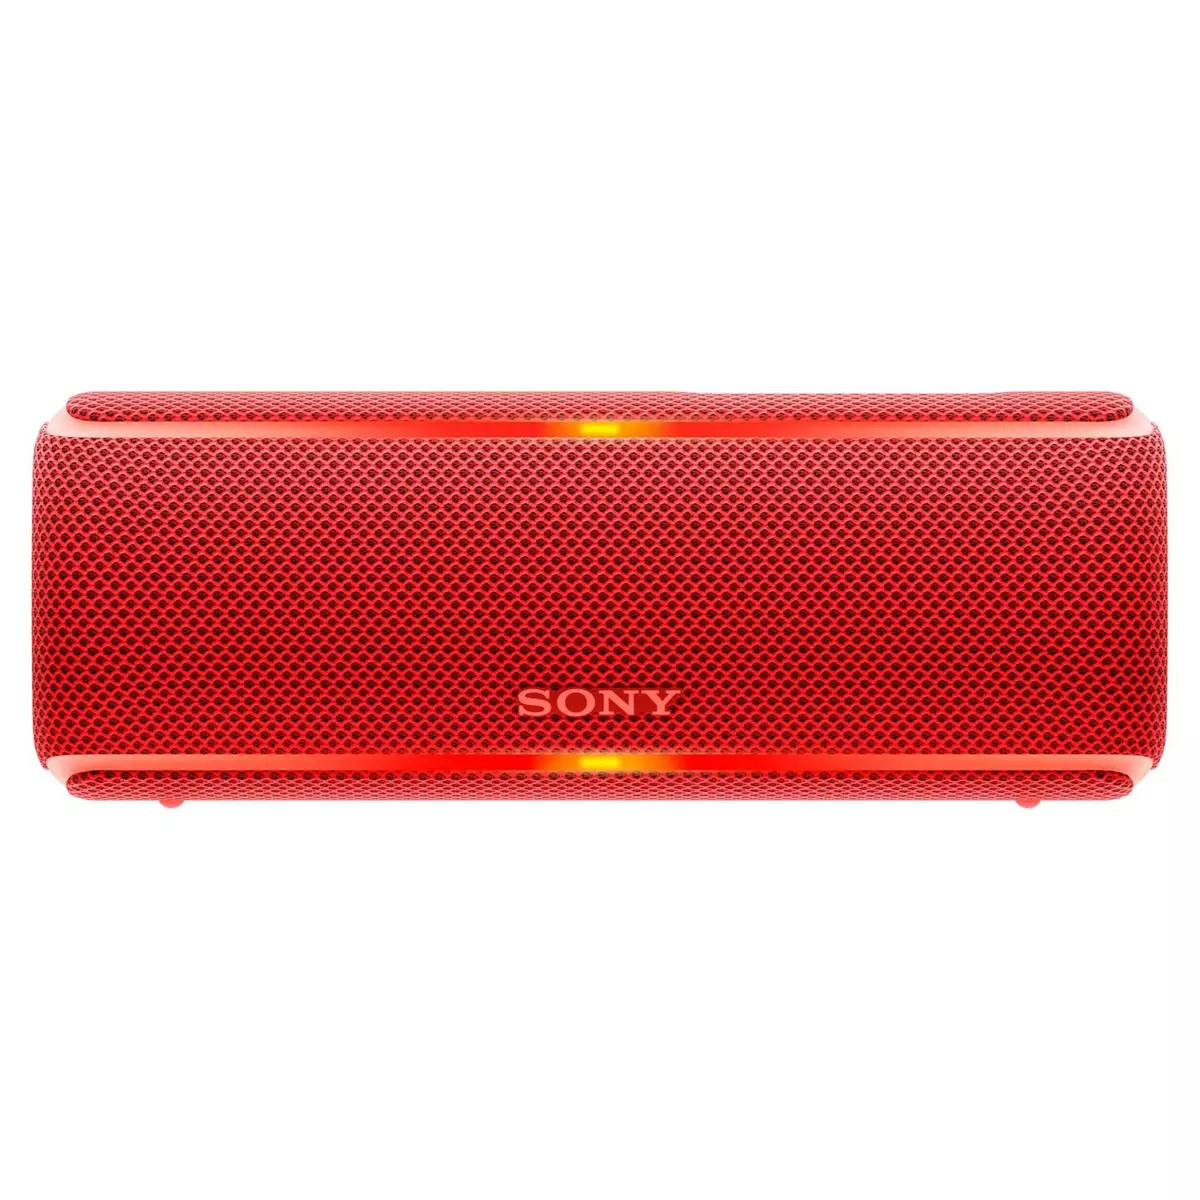 SONY XB 21 - Rouge - Enceinte